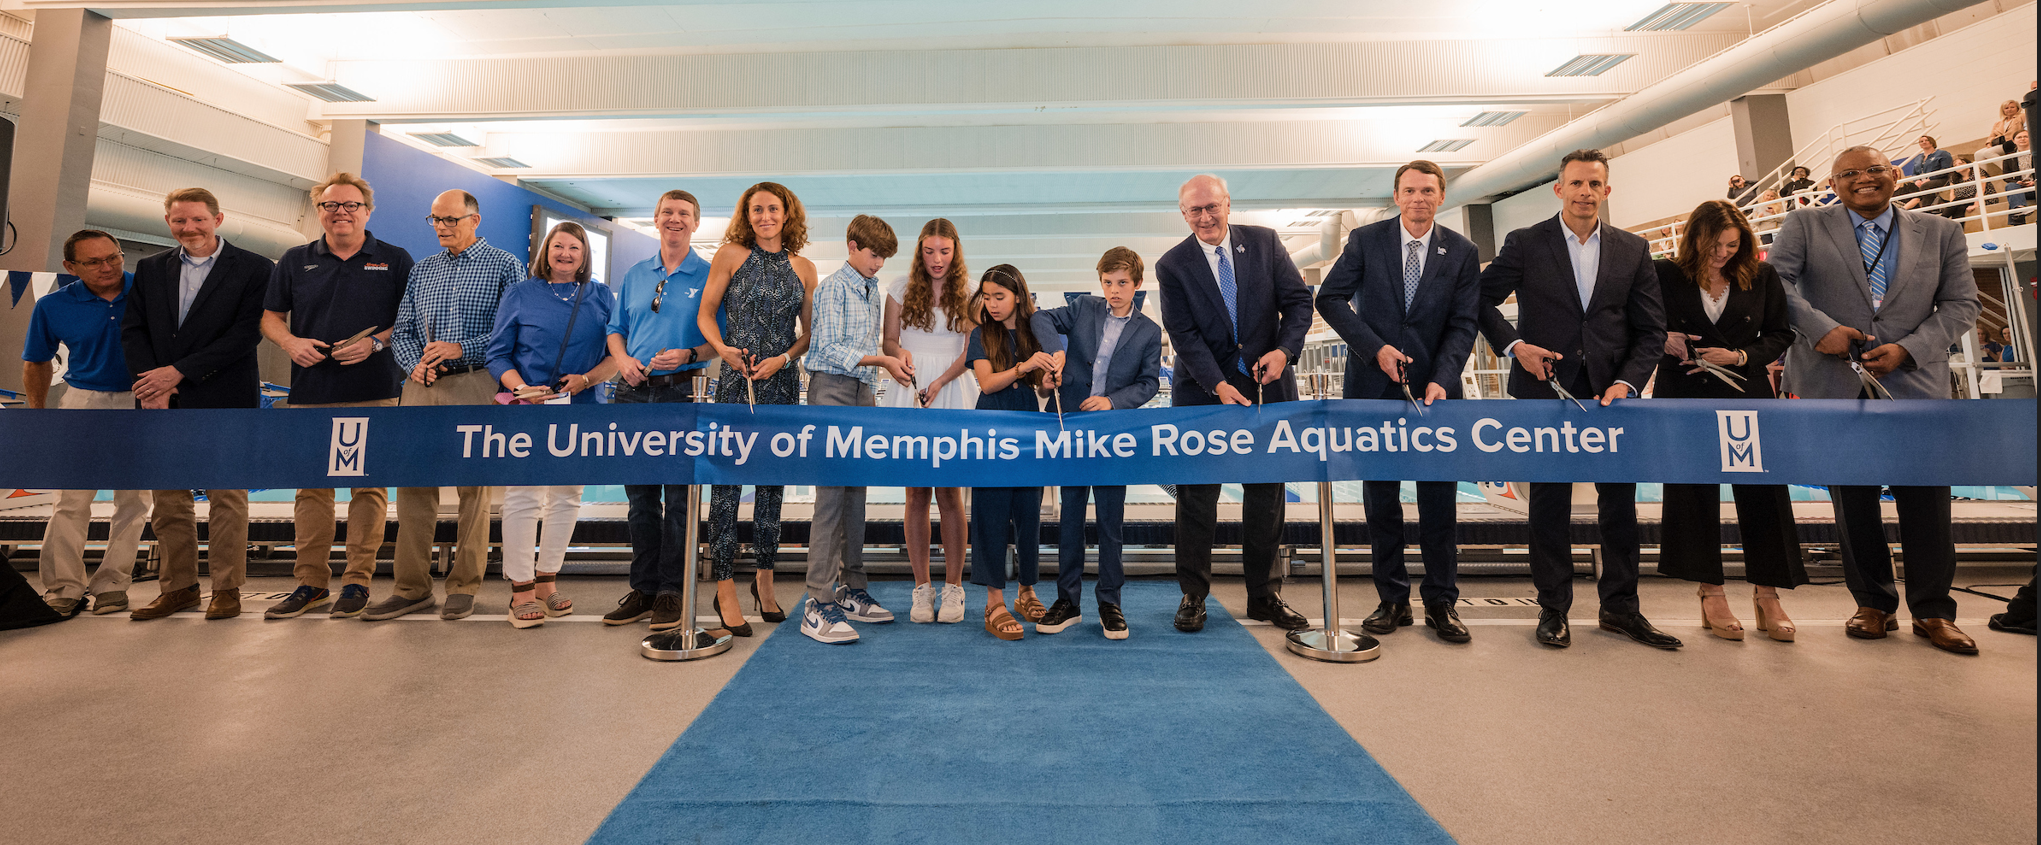 ribbon cutting of the university of memphis mike rose aquatics center 